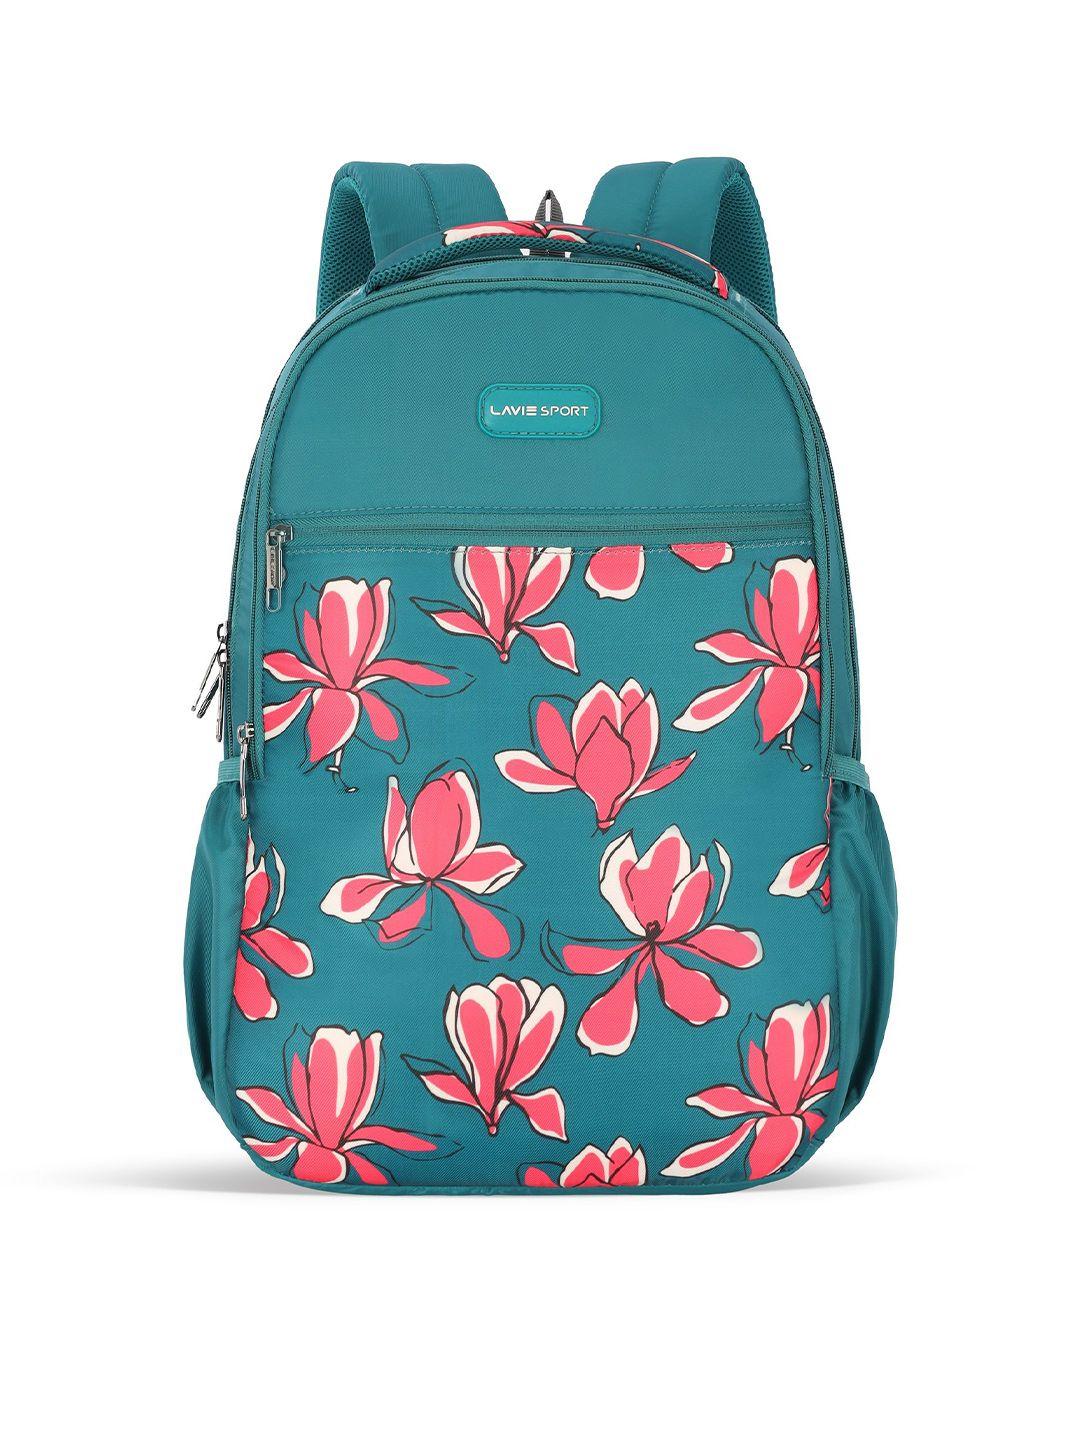 lavie sport floral printed backpack